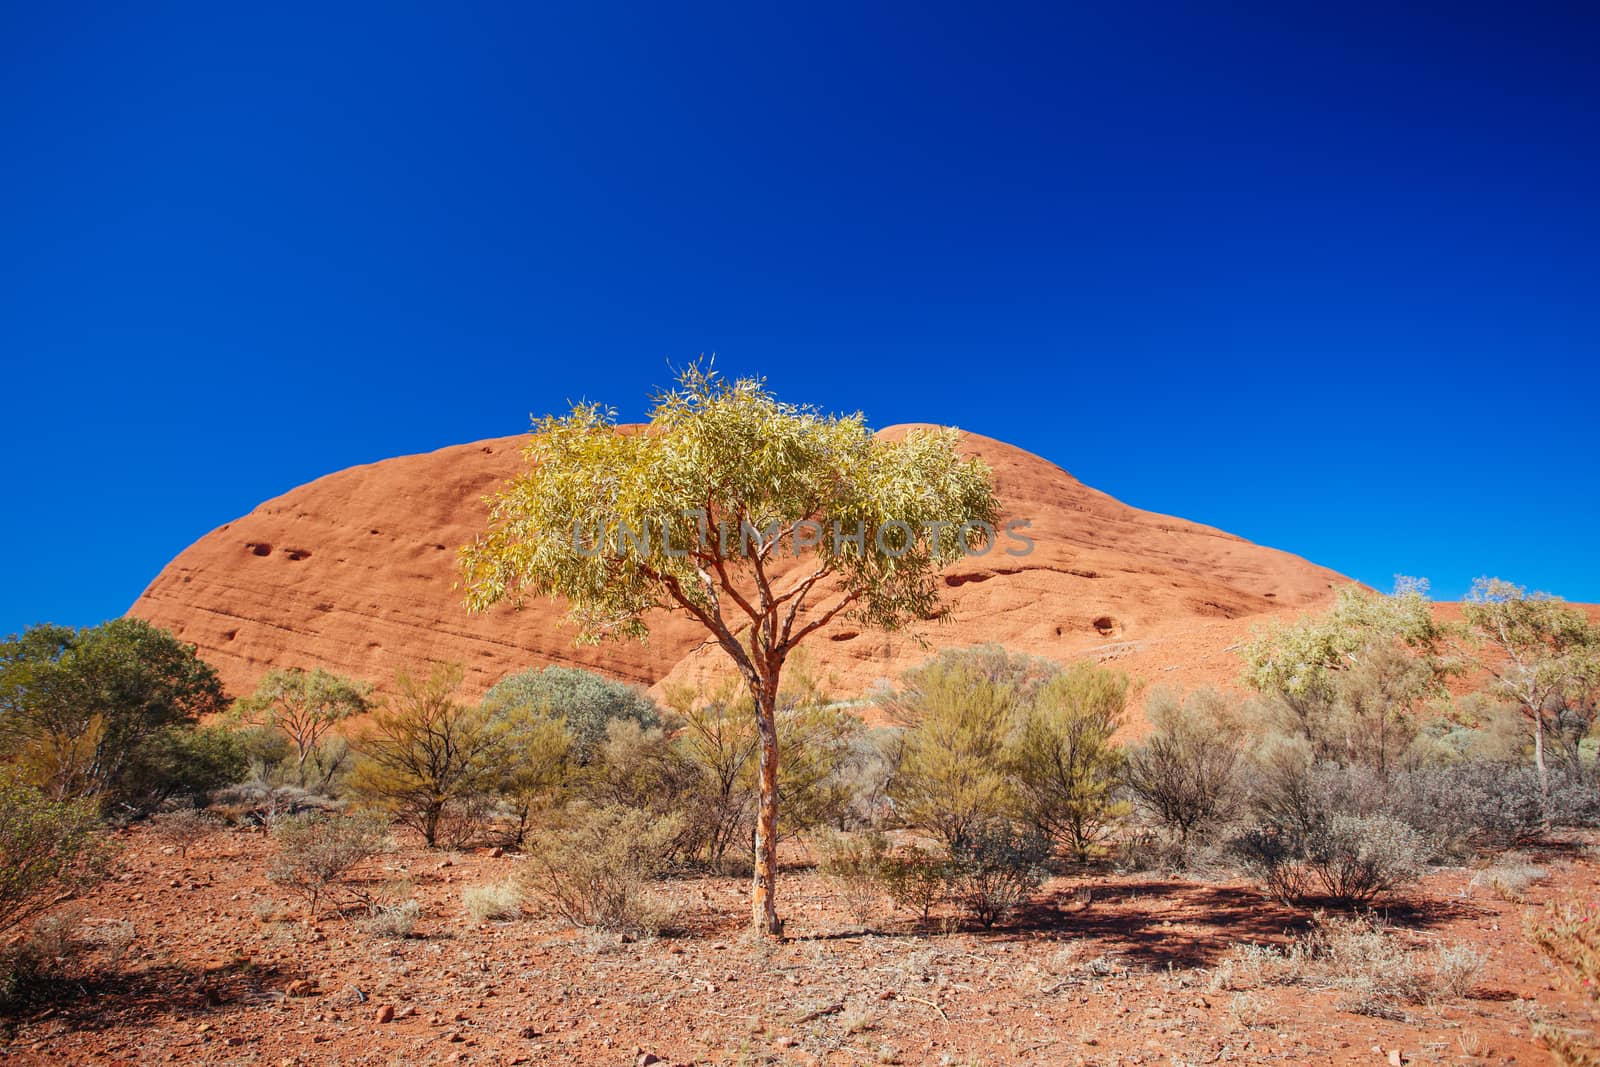 The Olgas (Kata-Tjuta) near the Valley of the Winds walk in the Northern Territory, Australia